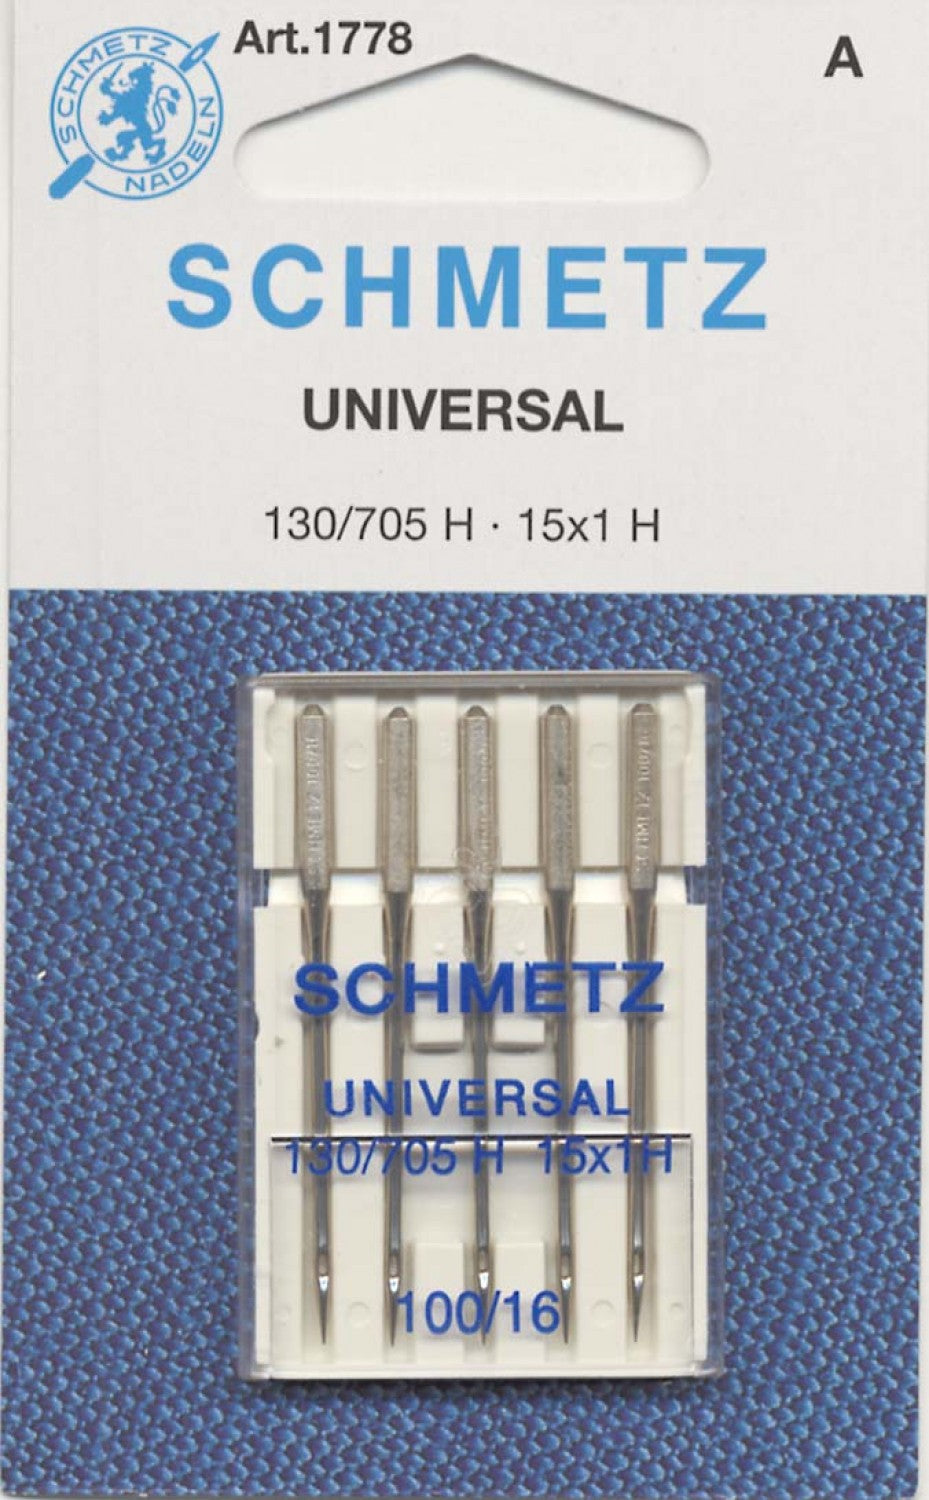 Schmetz Universal Needle - Size 100/16 - 1 Package of 5 Needles